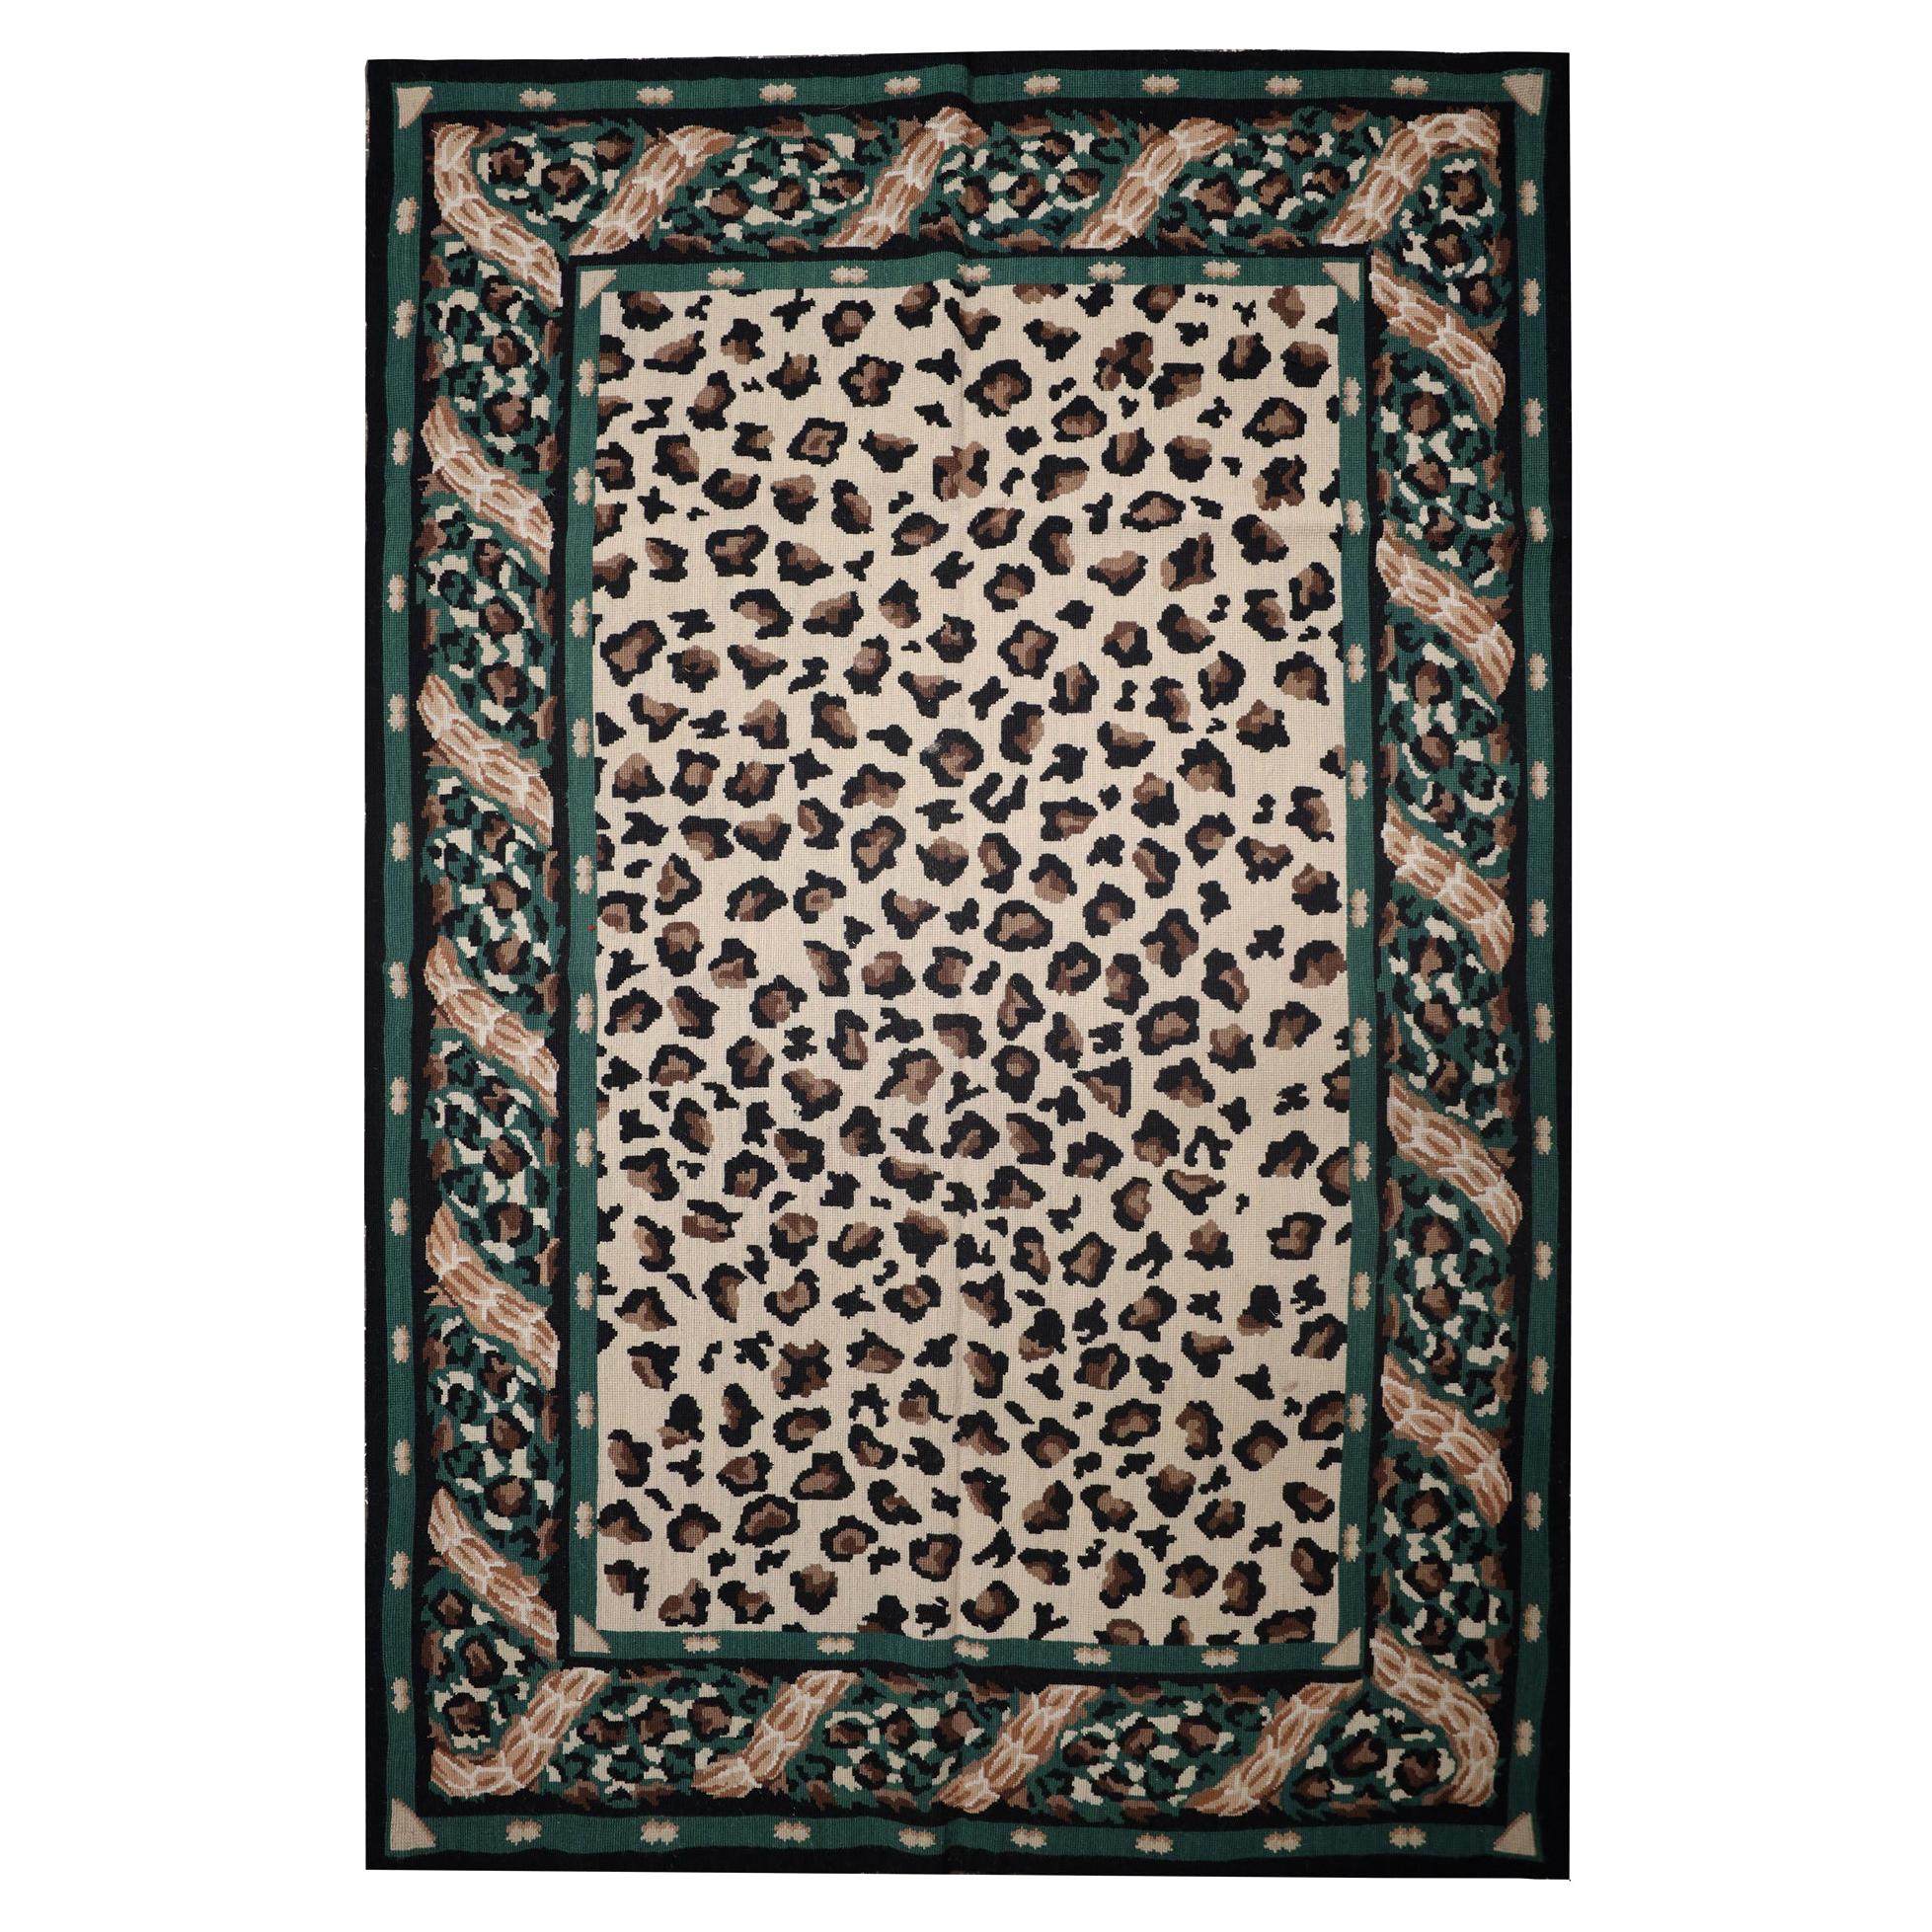 Modern Carpet Handmade Needlepoint Rug, Green Leopard Print Area Rug